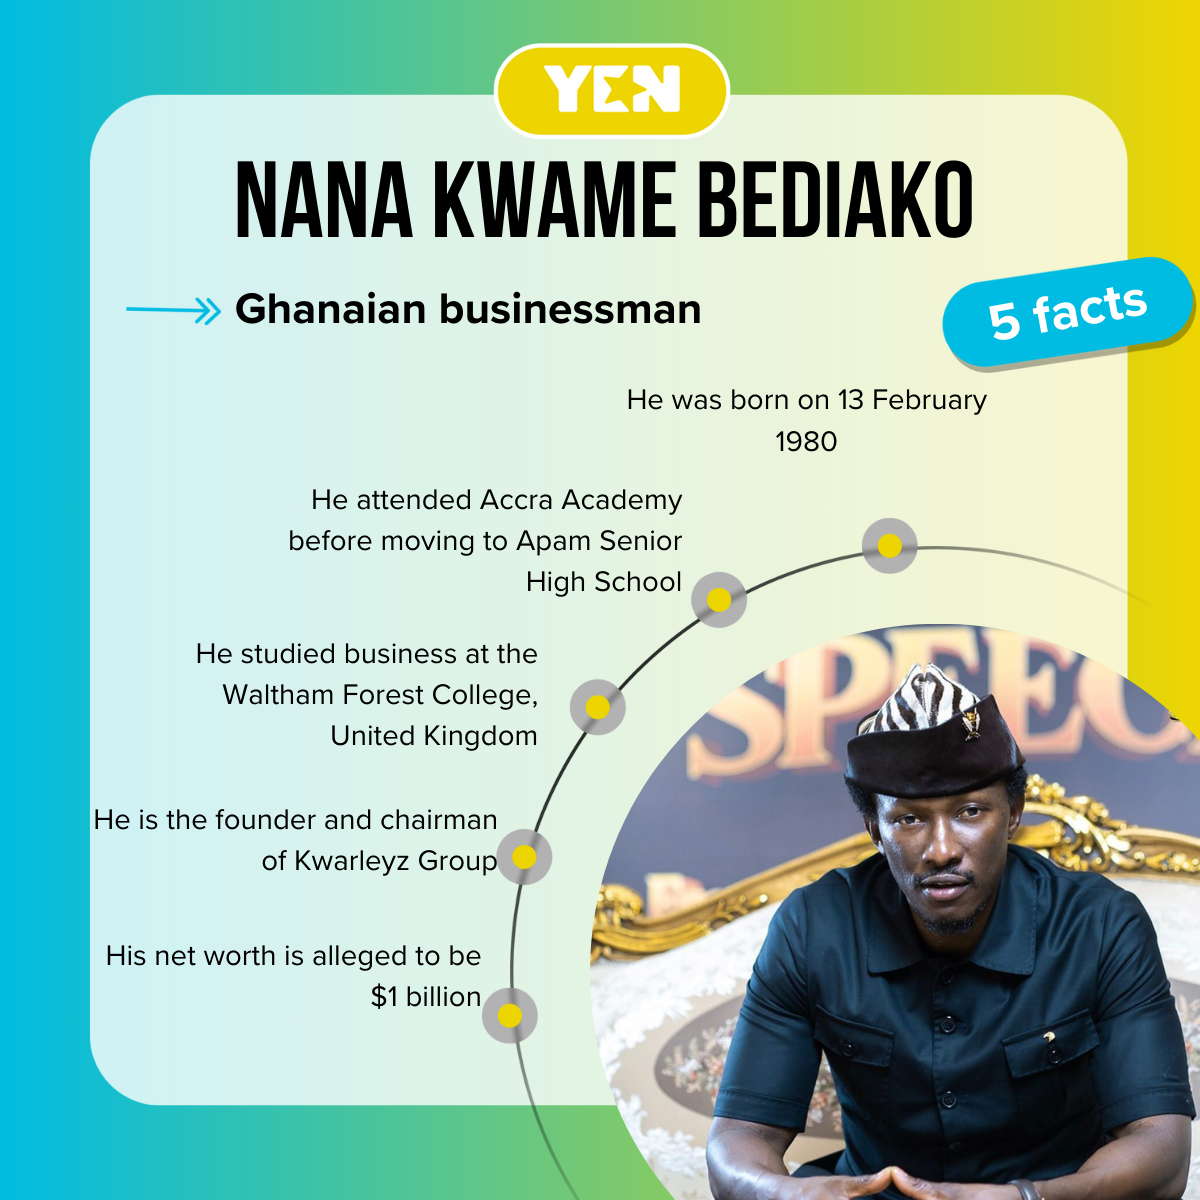 Top 5 facts about Nana Kwame Bediako